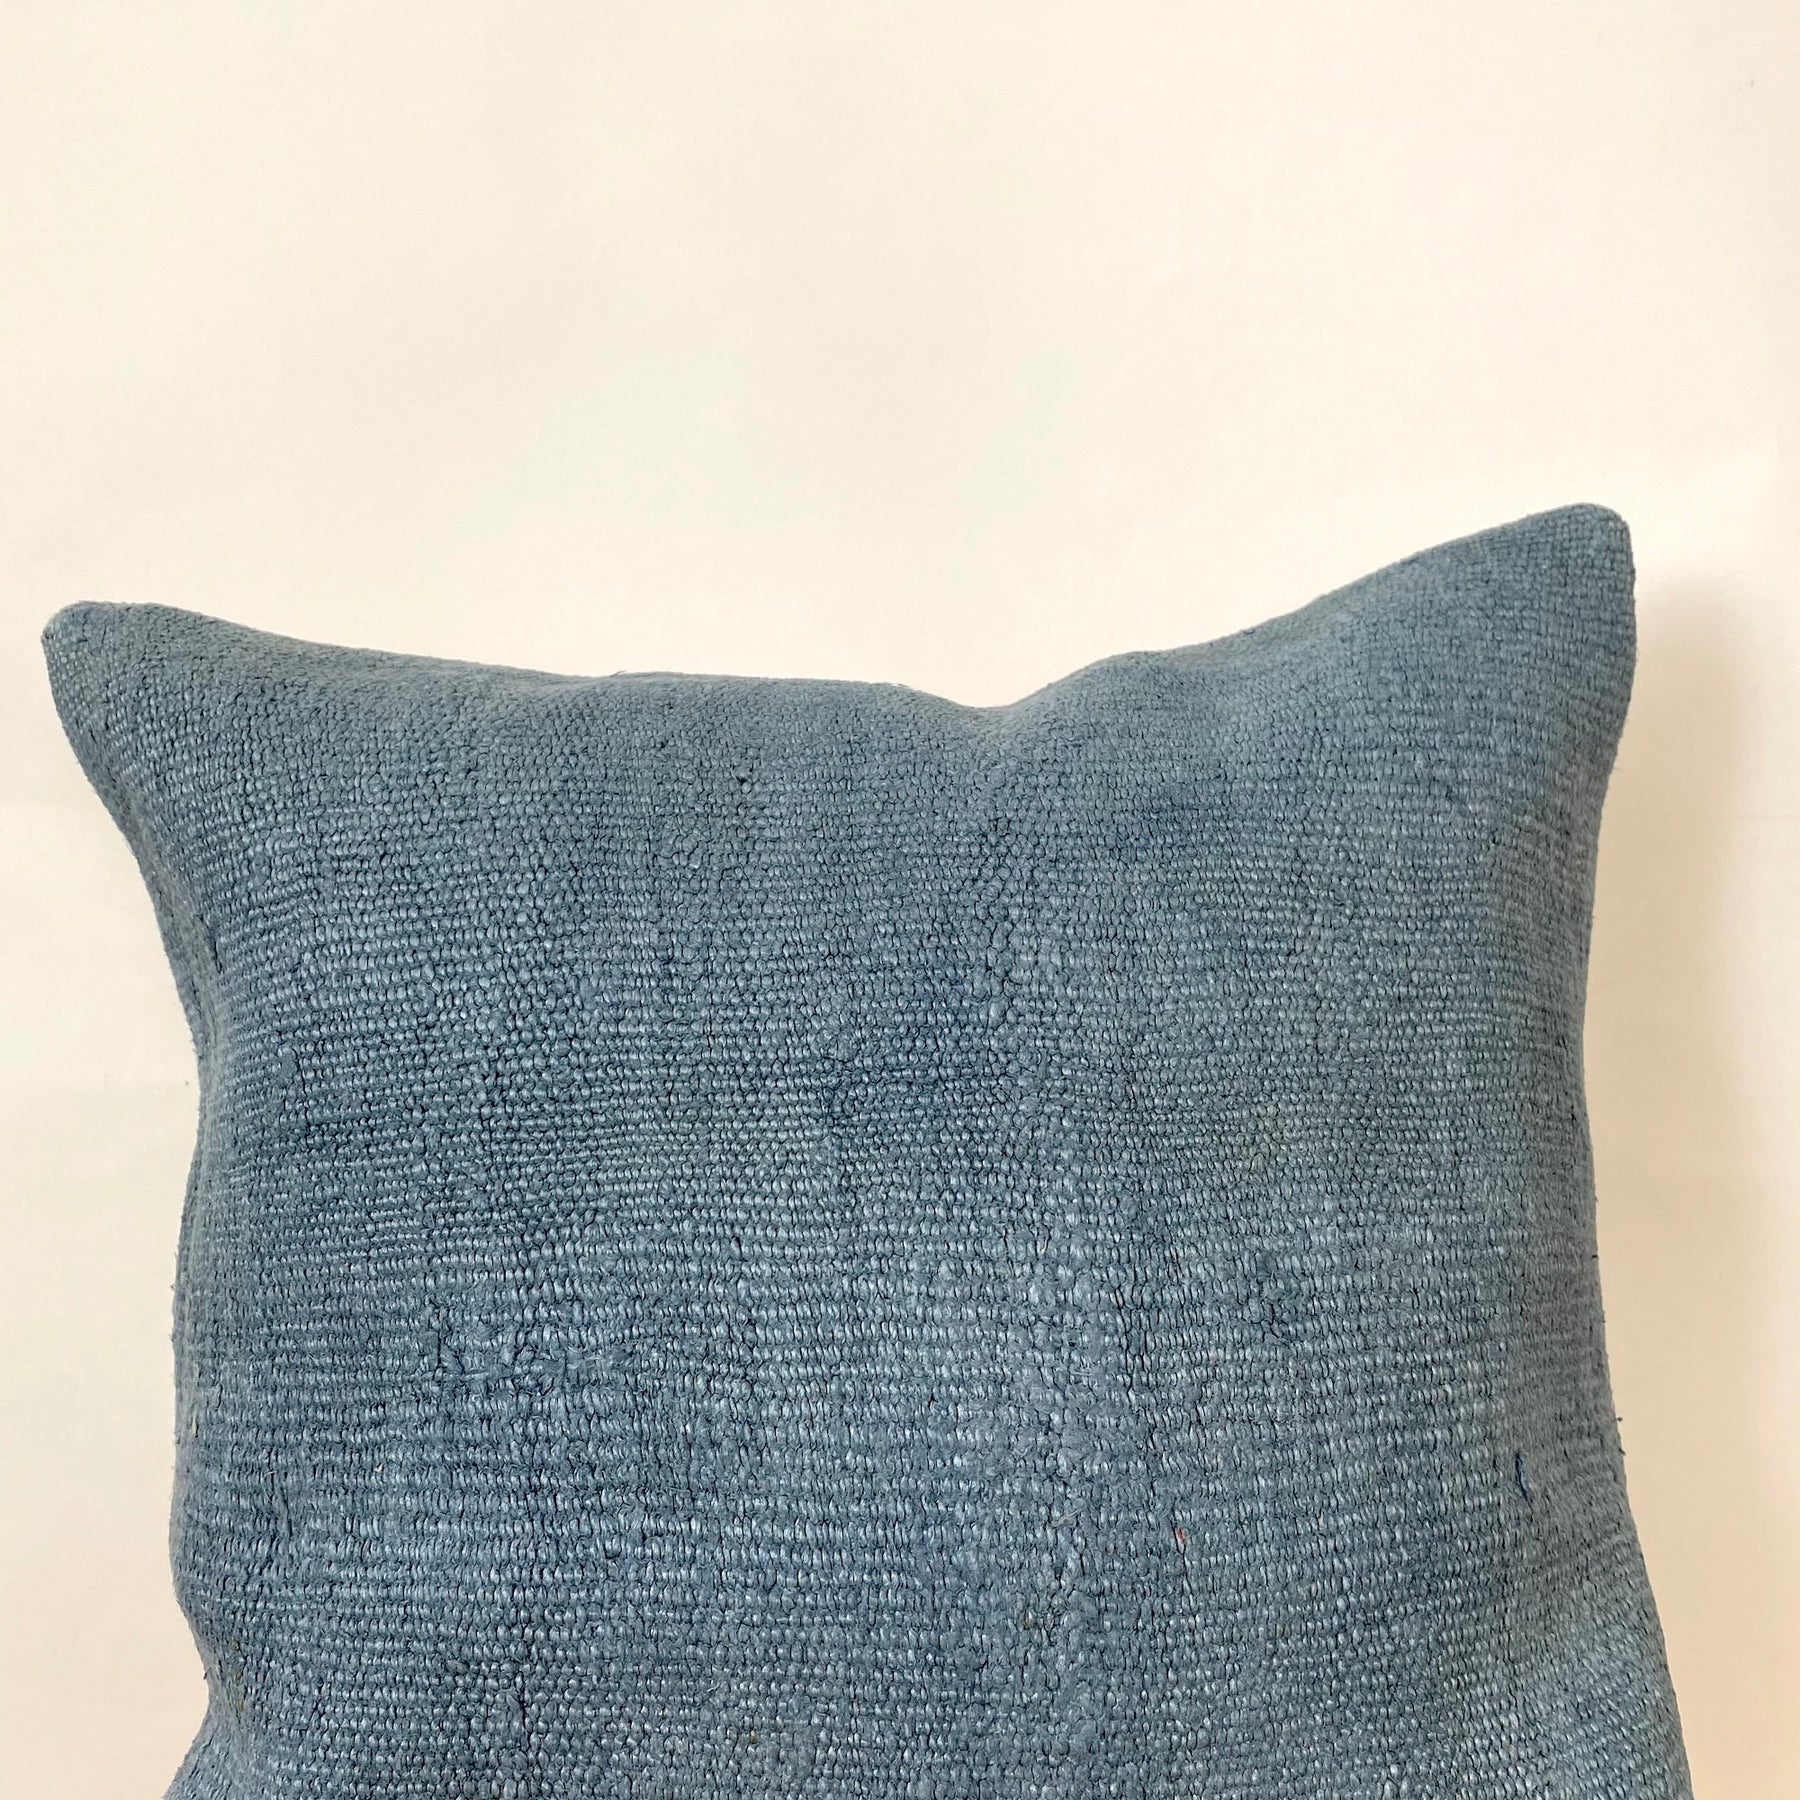 Gael - Blue Hemp Pillow Cover - kudenrugs